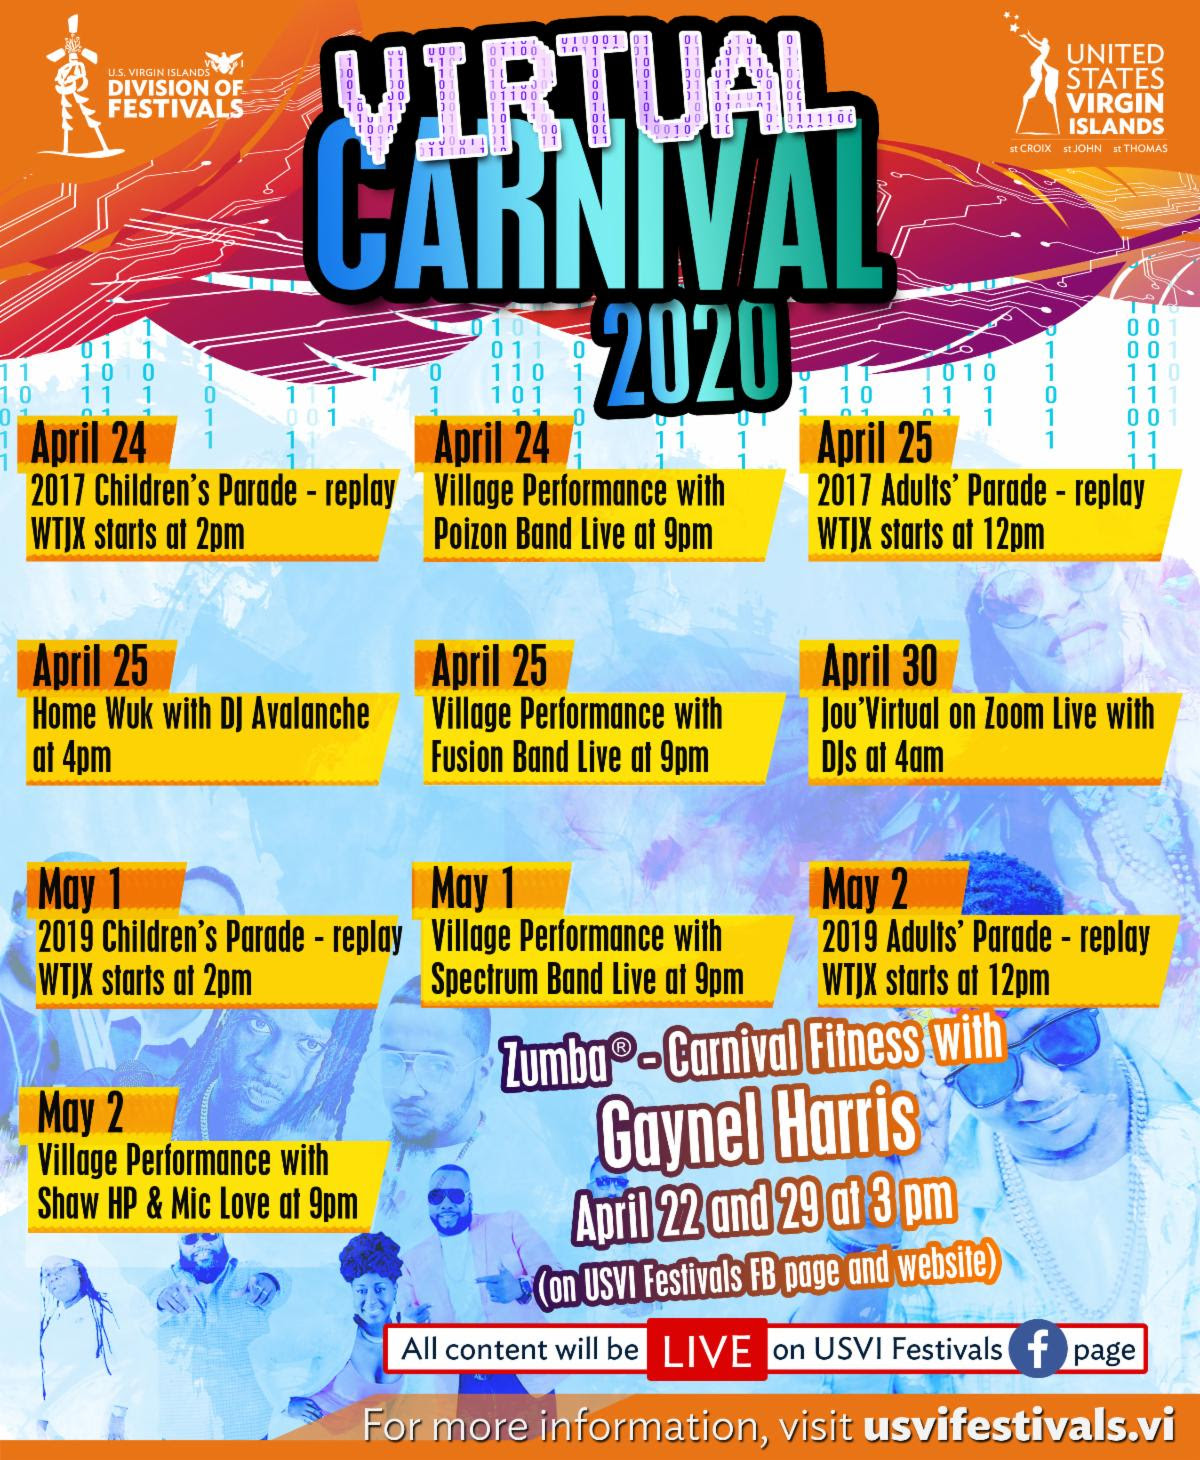 Division of Festivals Announces Expanded Virtual Carnival St. Croix